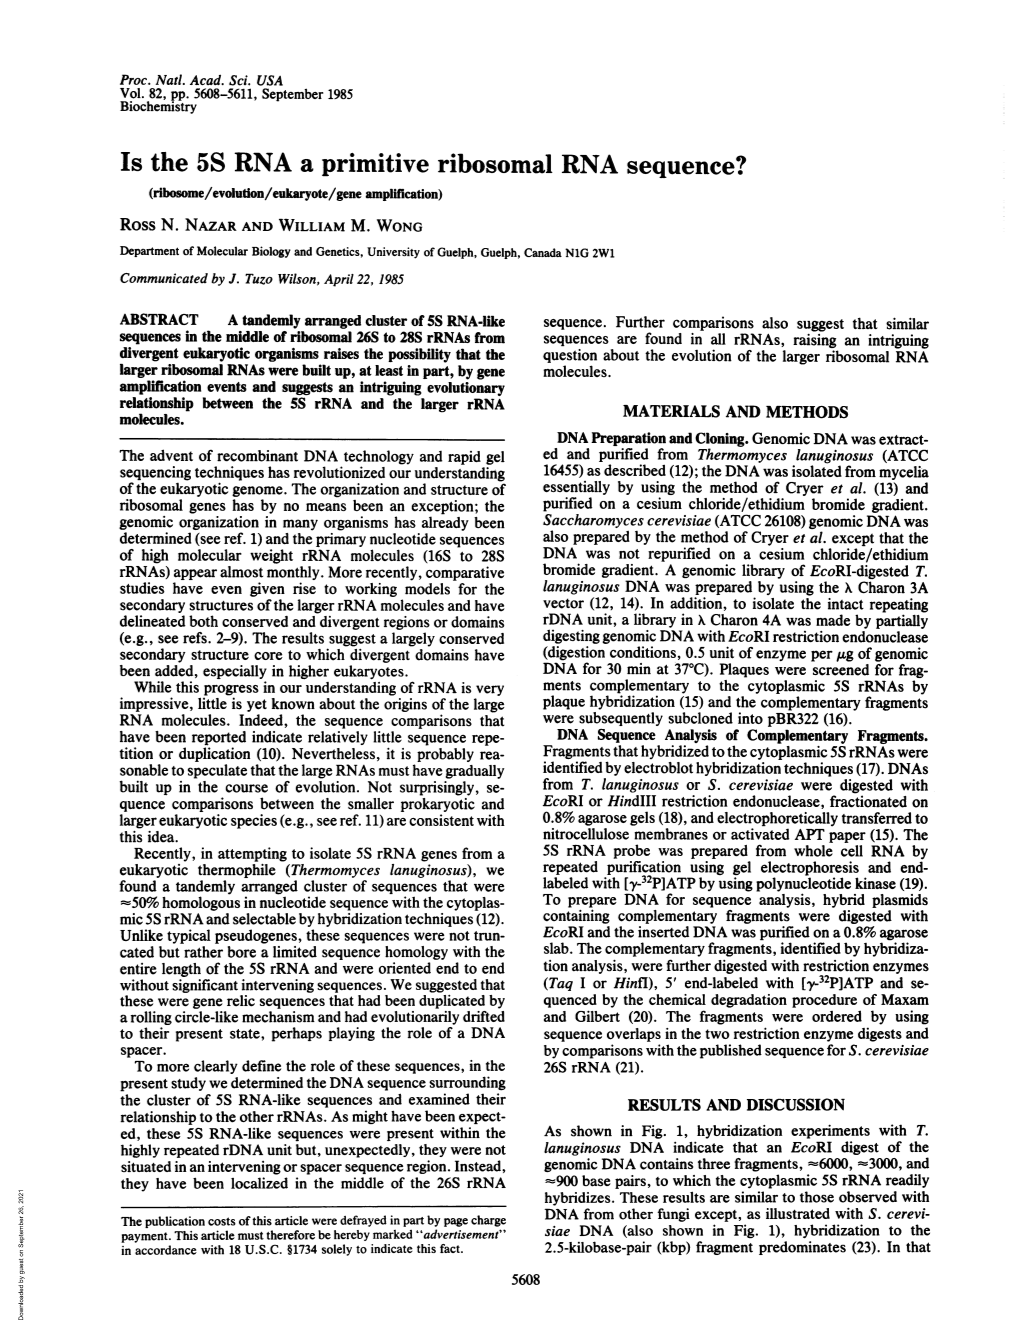 Is the 5S RNA a Primitive Ribosomal RNA Sequence? (Ribosome/Evolutlon/Eukaryote/Gene Amplification) Ross N